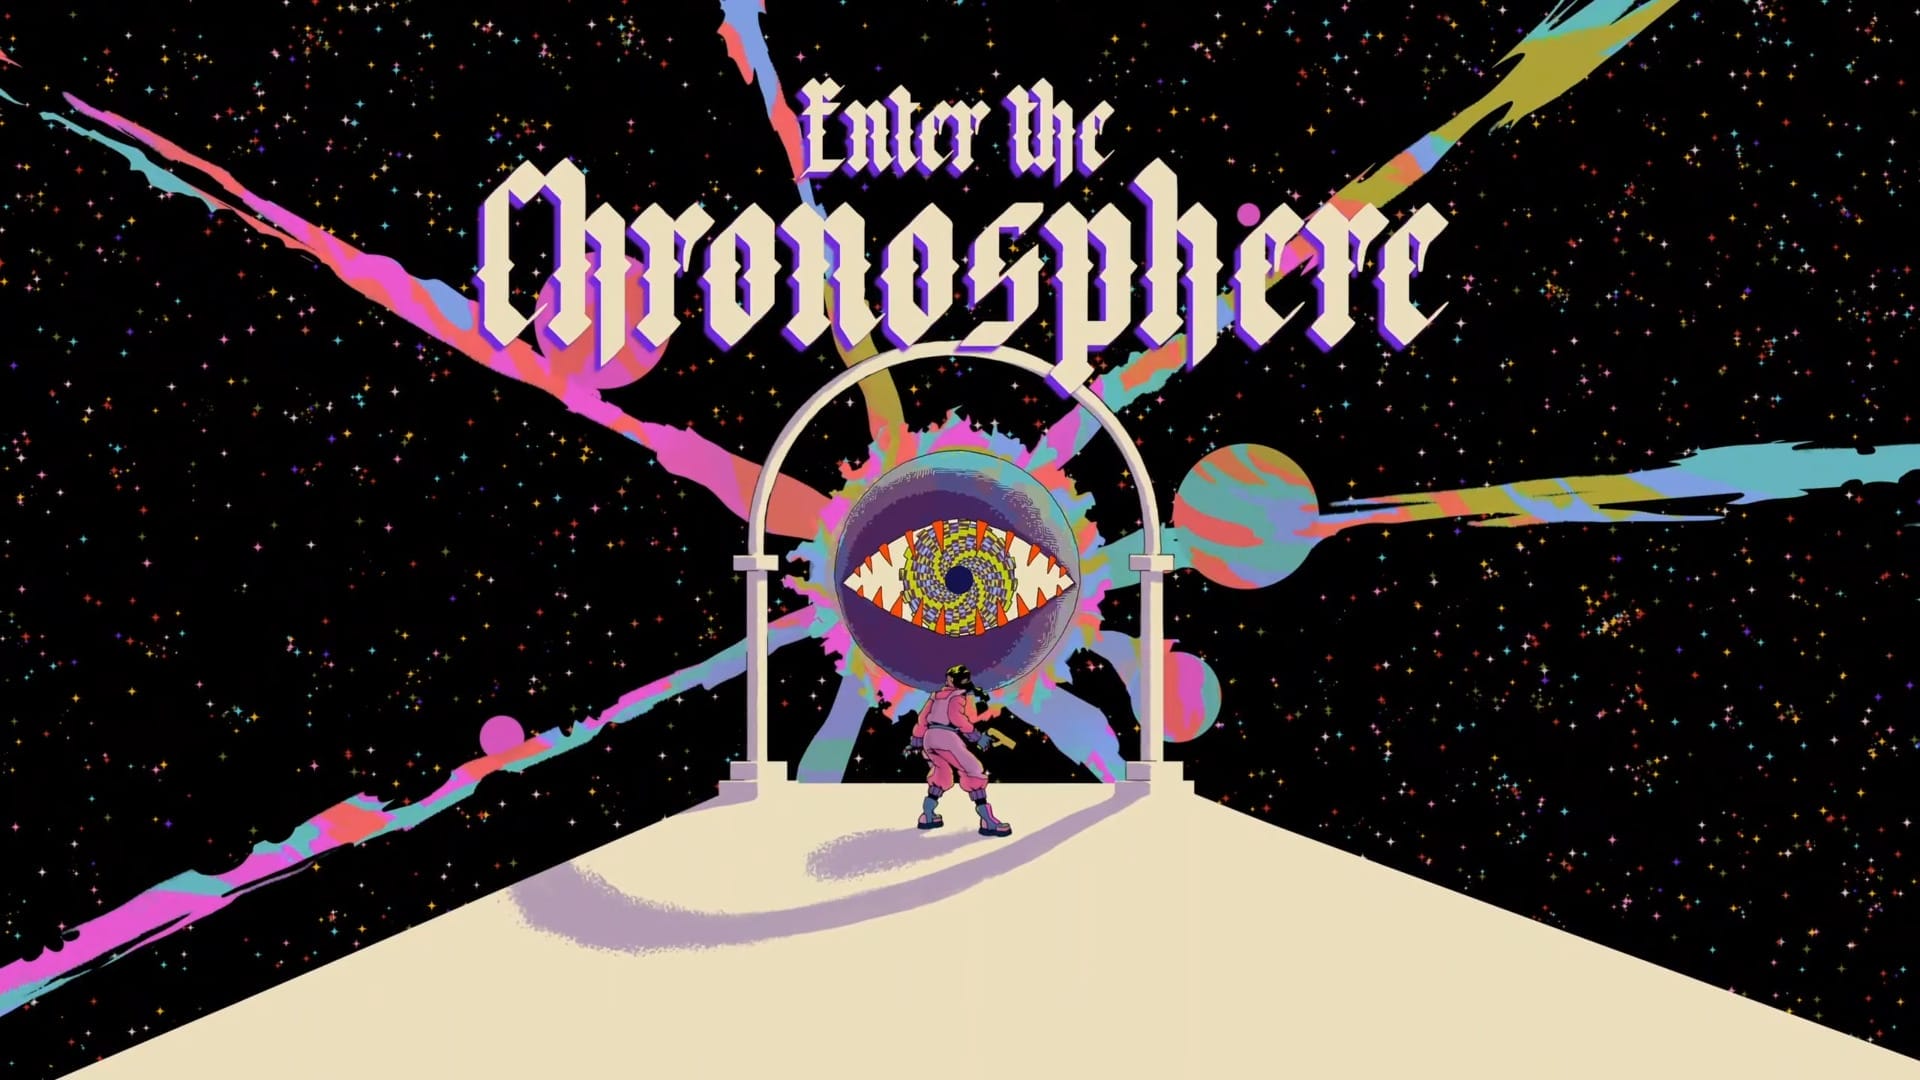 Enter the Chronosphere